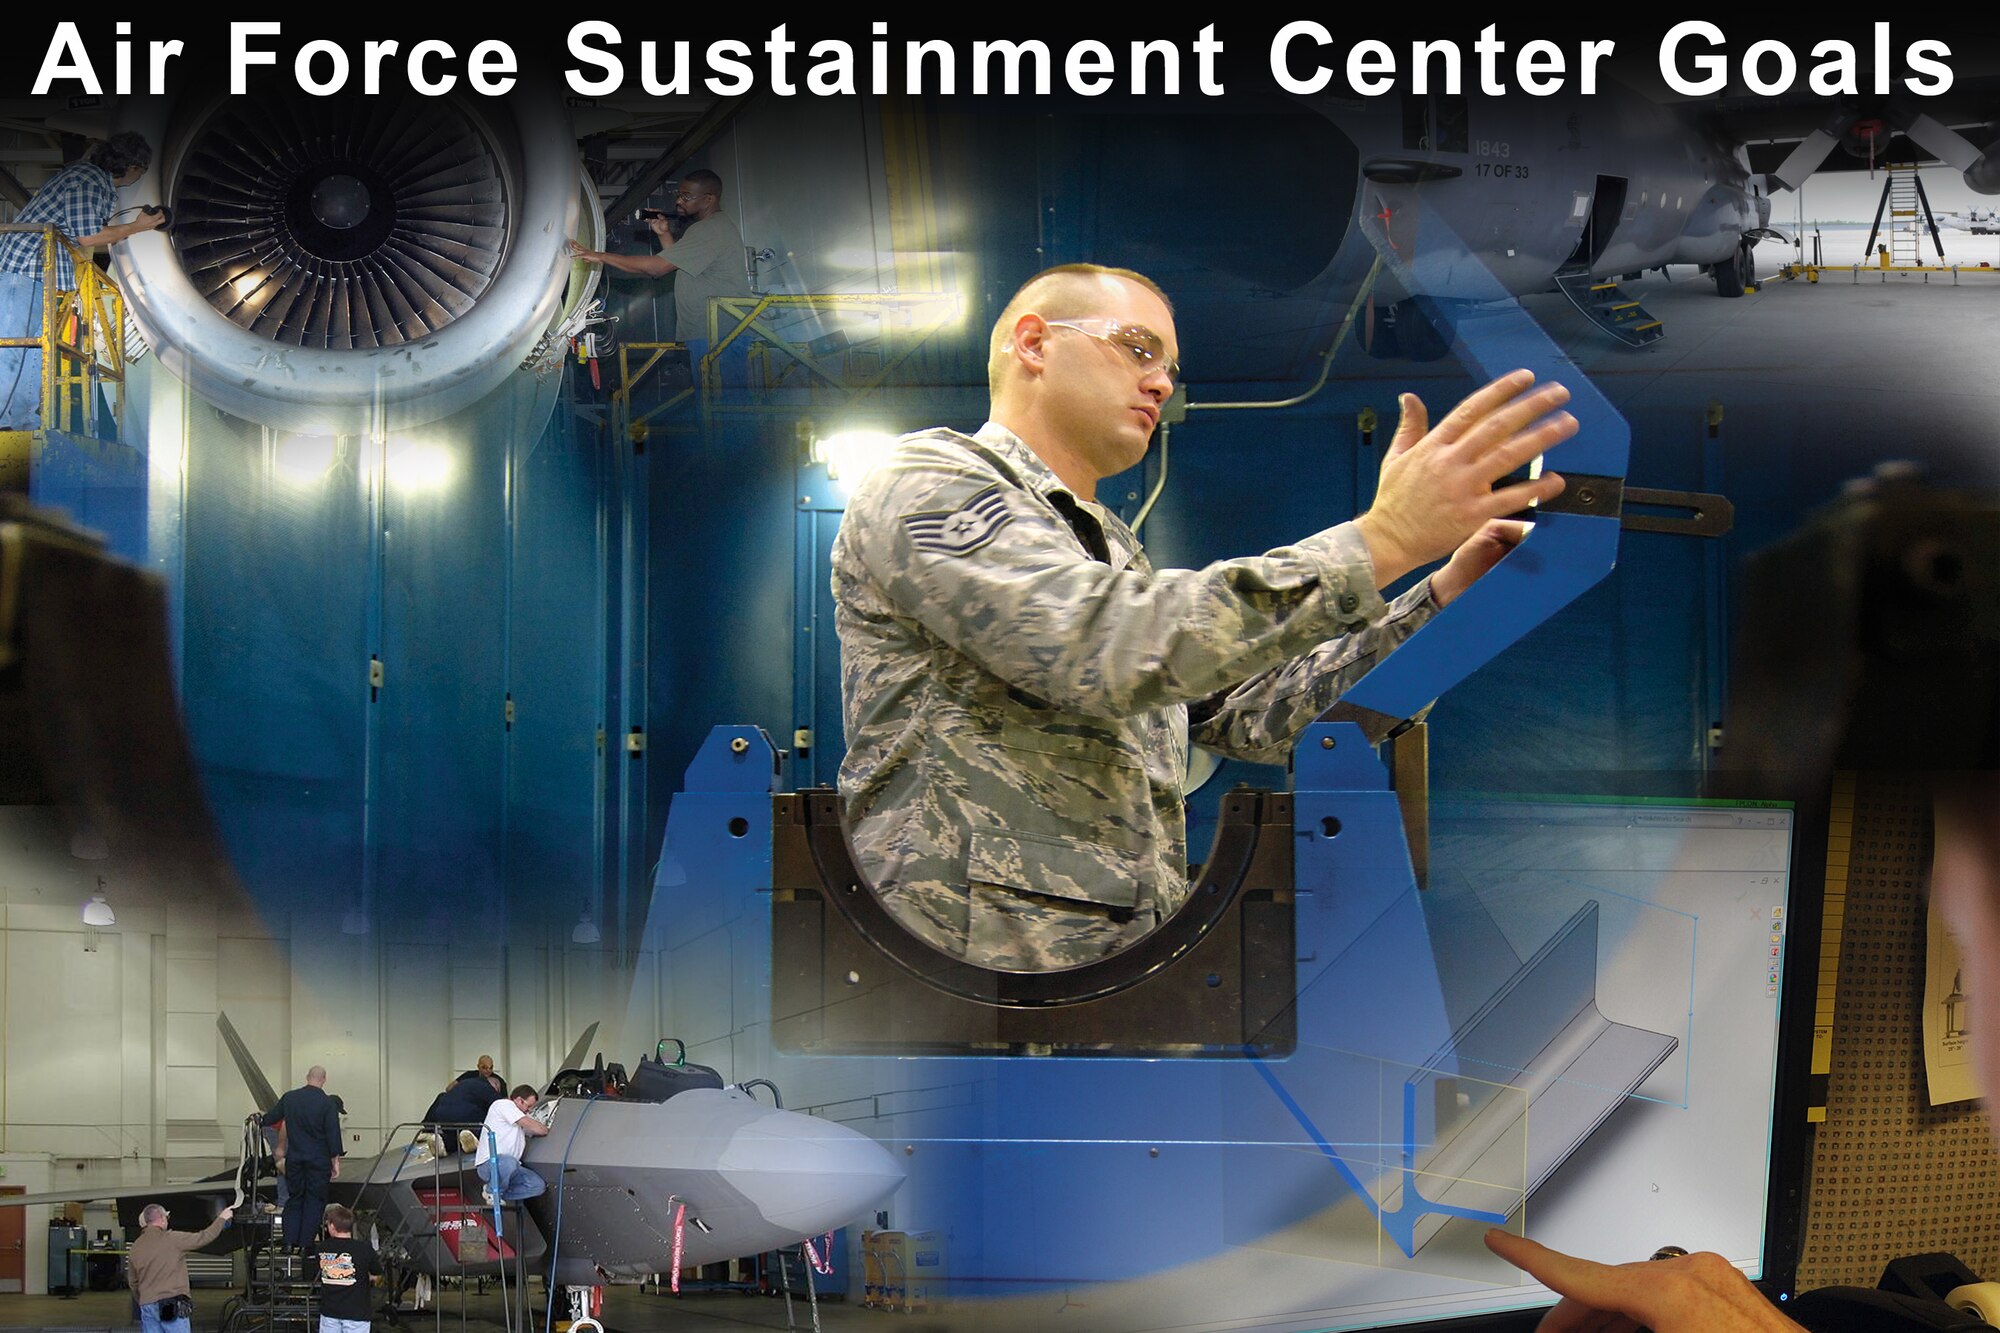 Lt. Gen. Bruce Litchfield outlined the Air Force Sustainment Center's five goals.